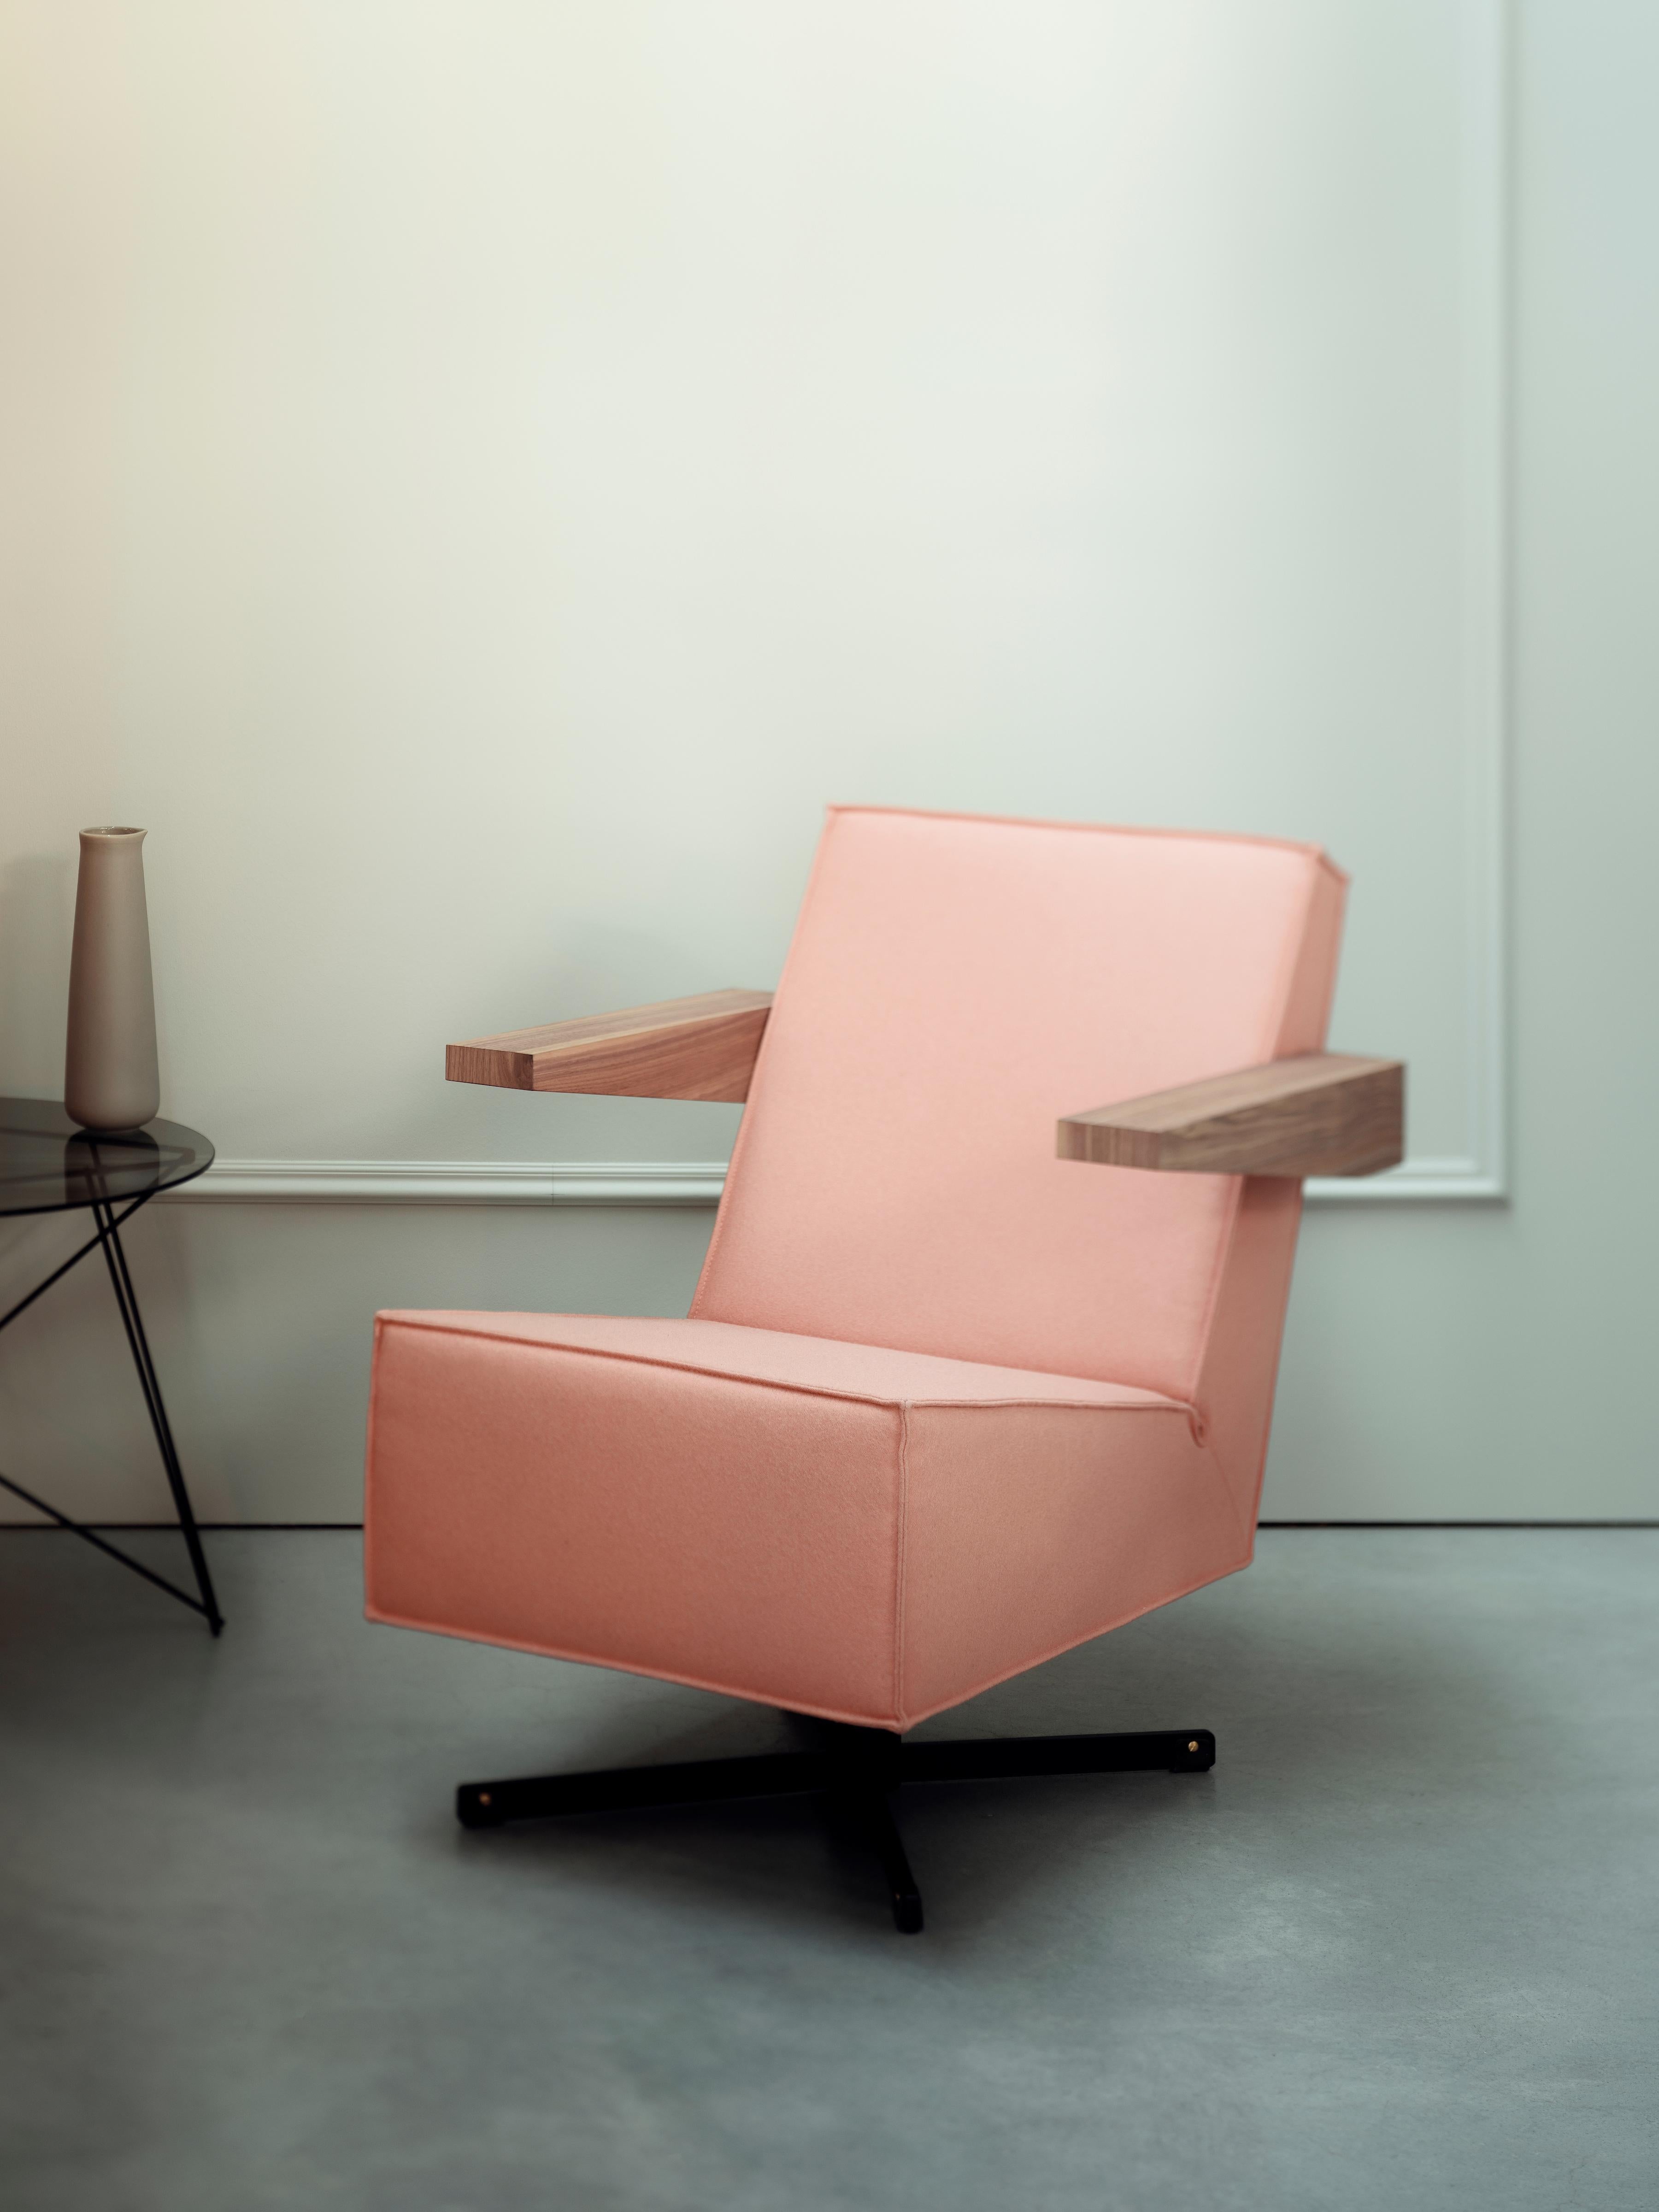 Gerrit Rietveld 1958 Unesco Press Room Chair for Spectrum, 'Colourful Vintage' For Sale 1